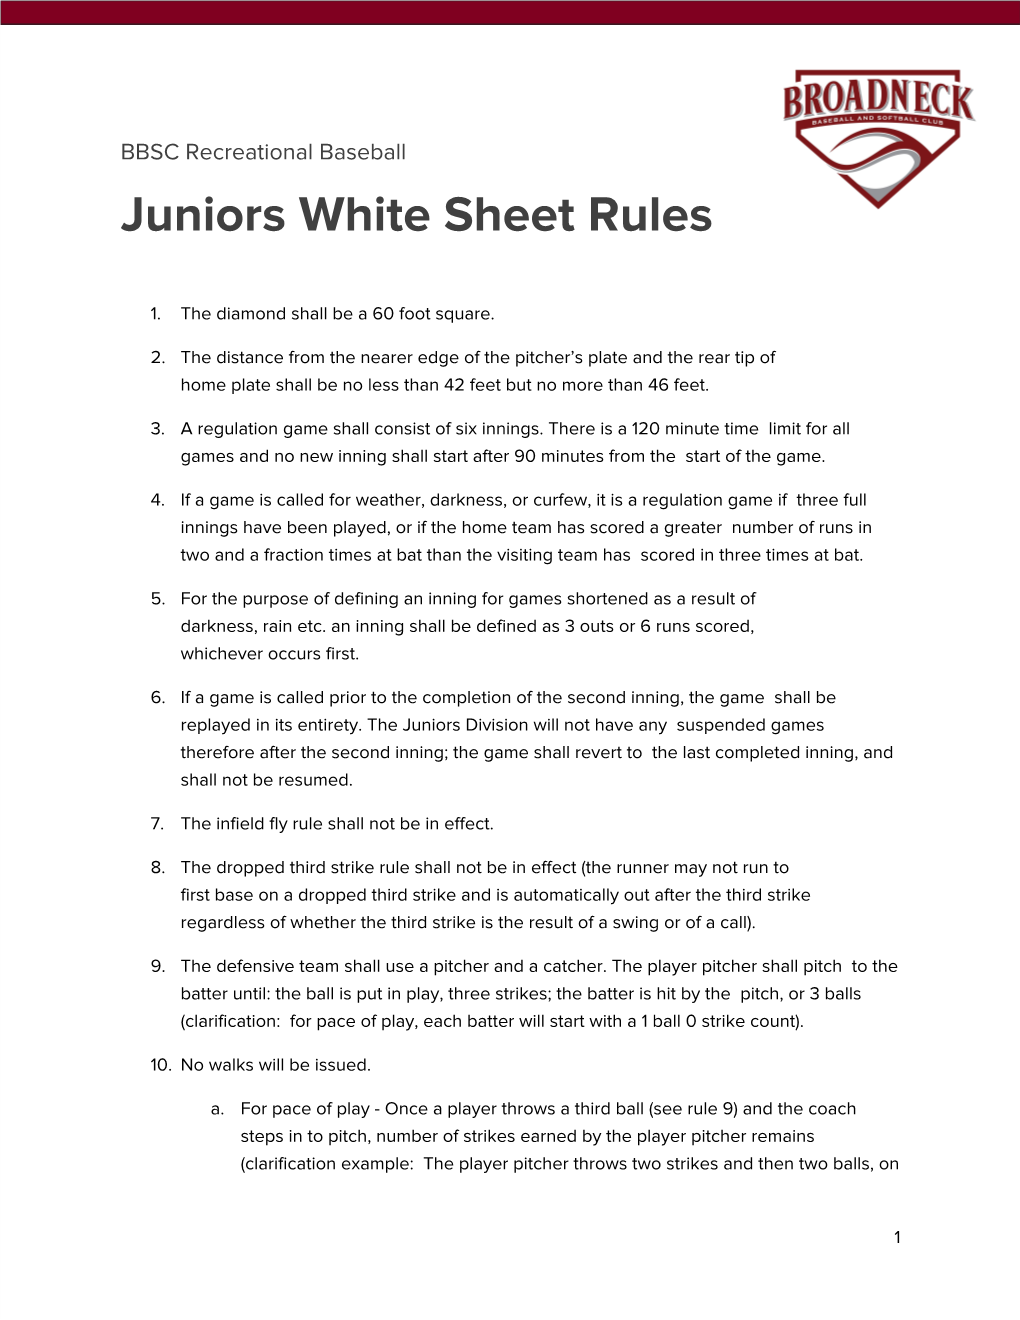 Juniors White Sheet Rules